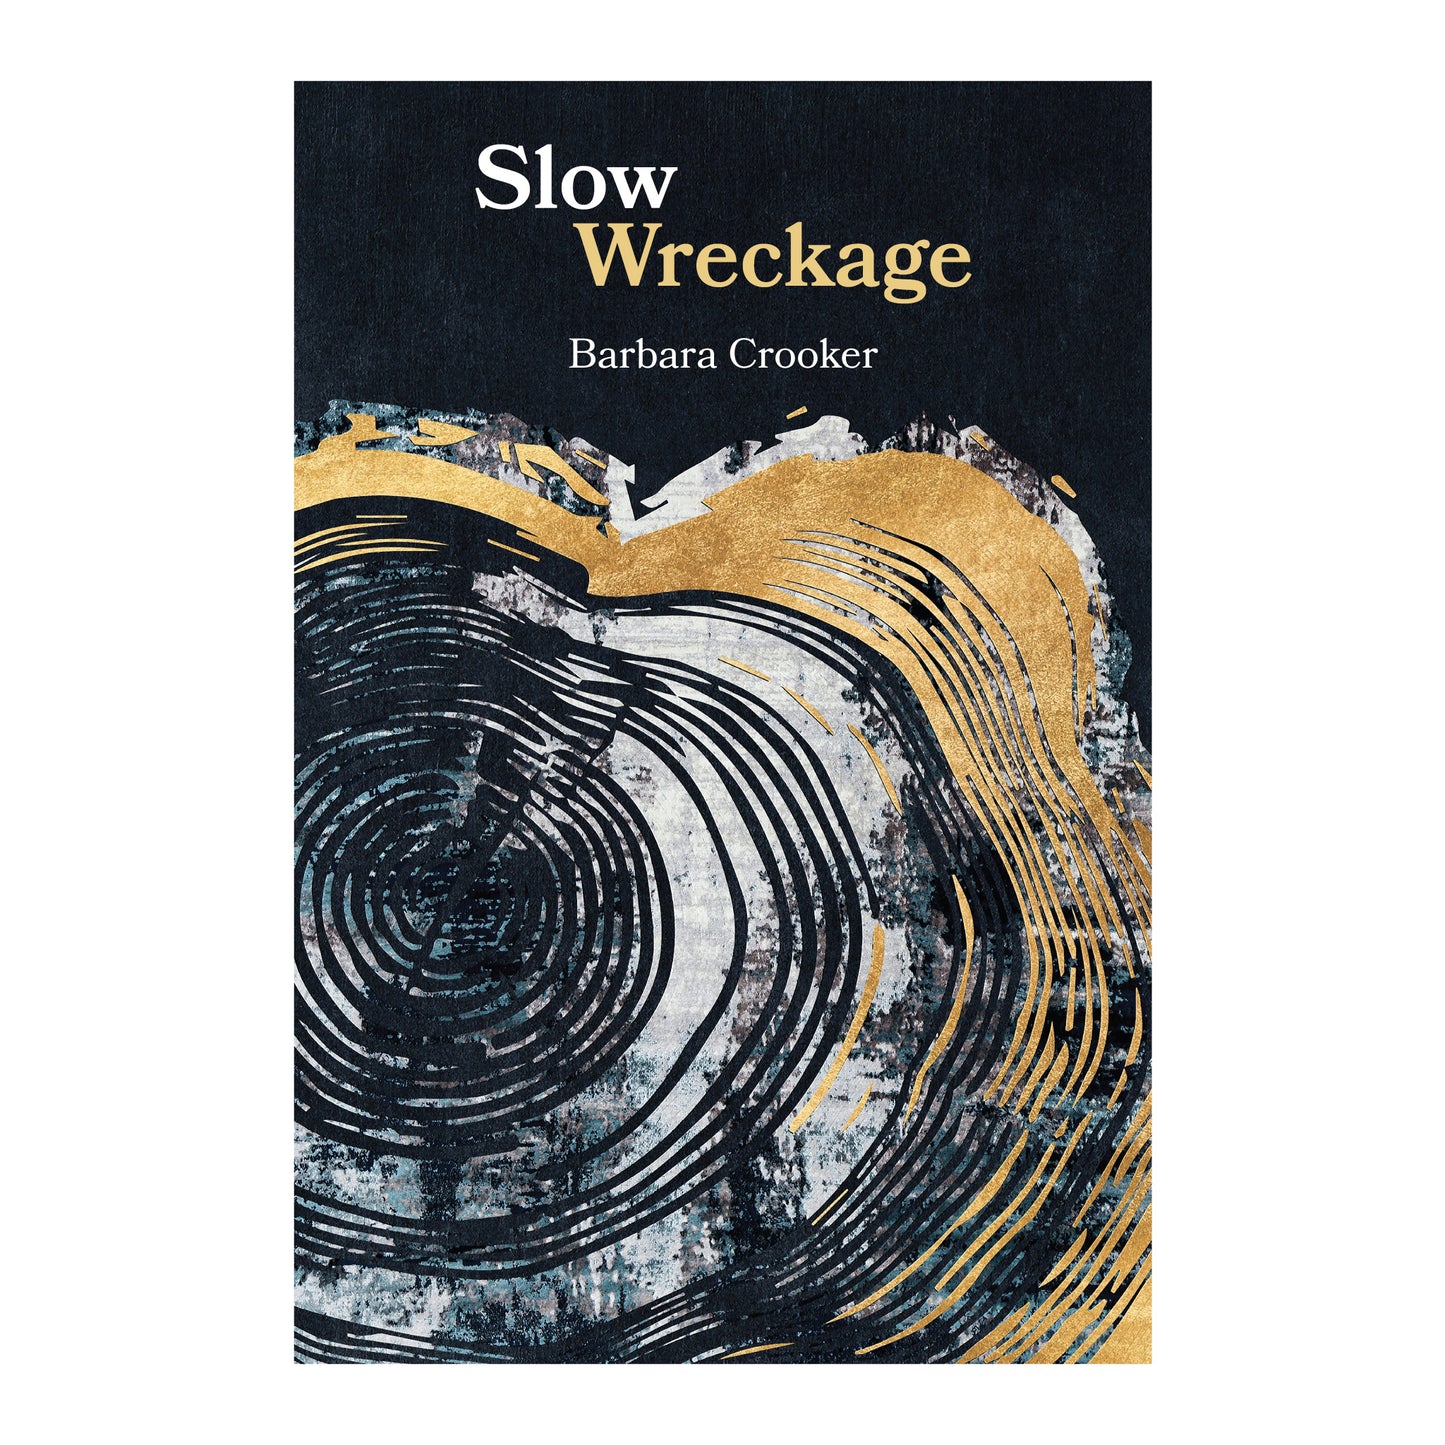 Slow Wreckage by Barbara Crooker